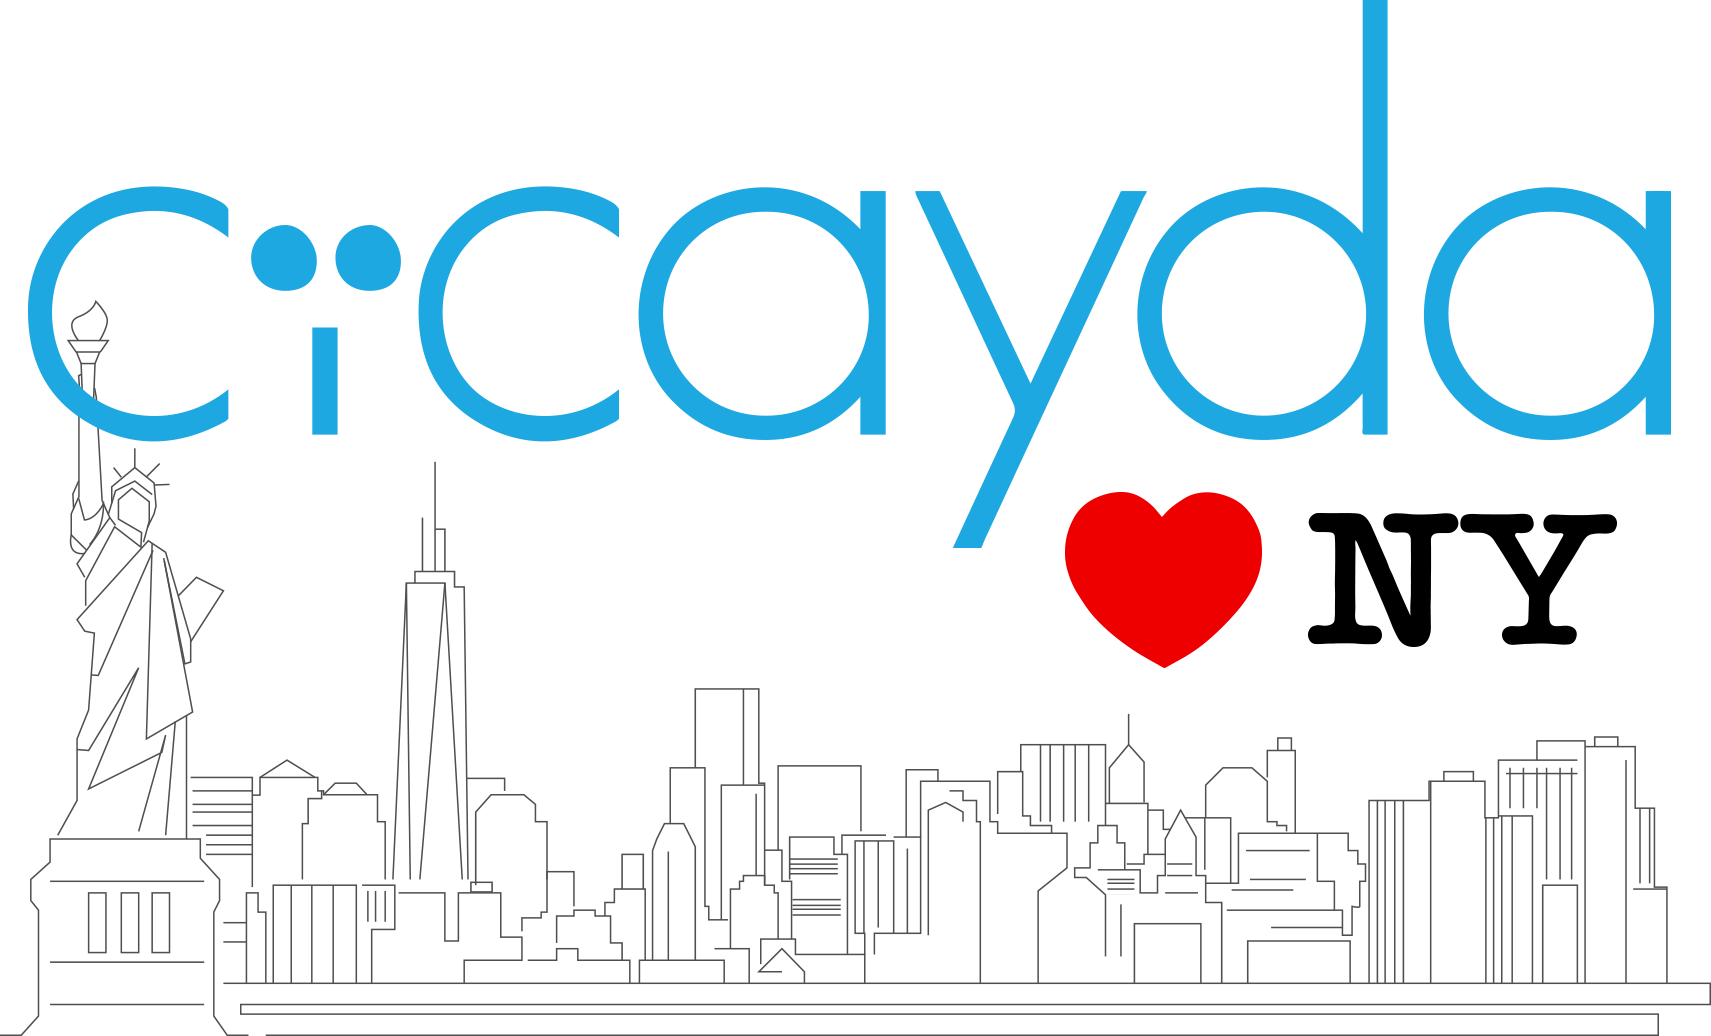 Cicayda-nyc - Love New York (1711x1036)